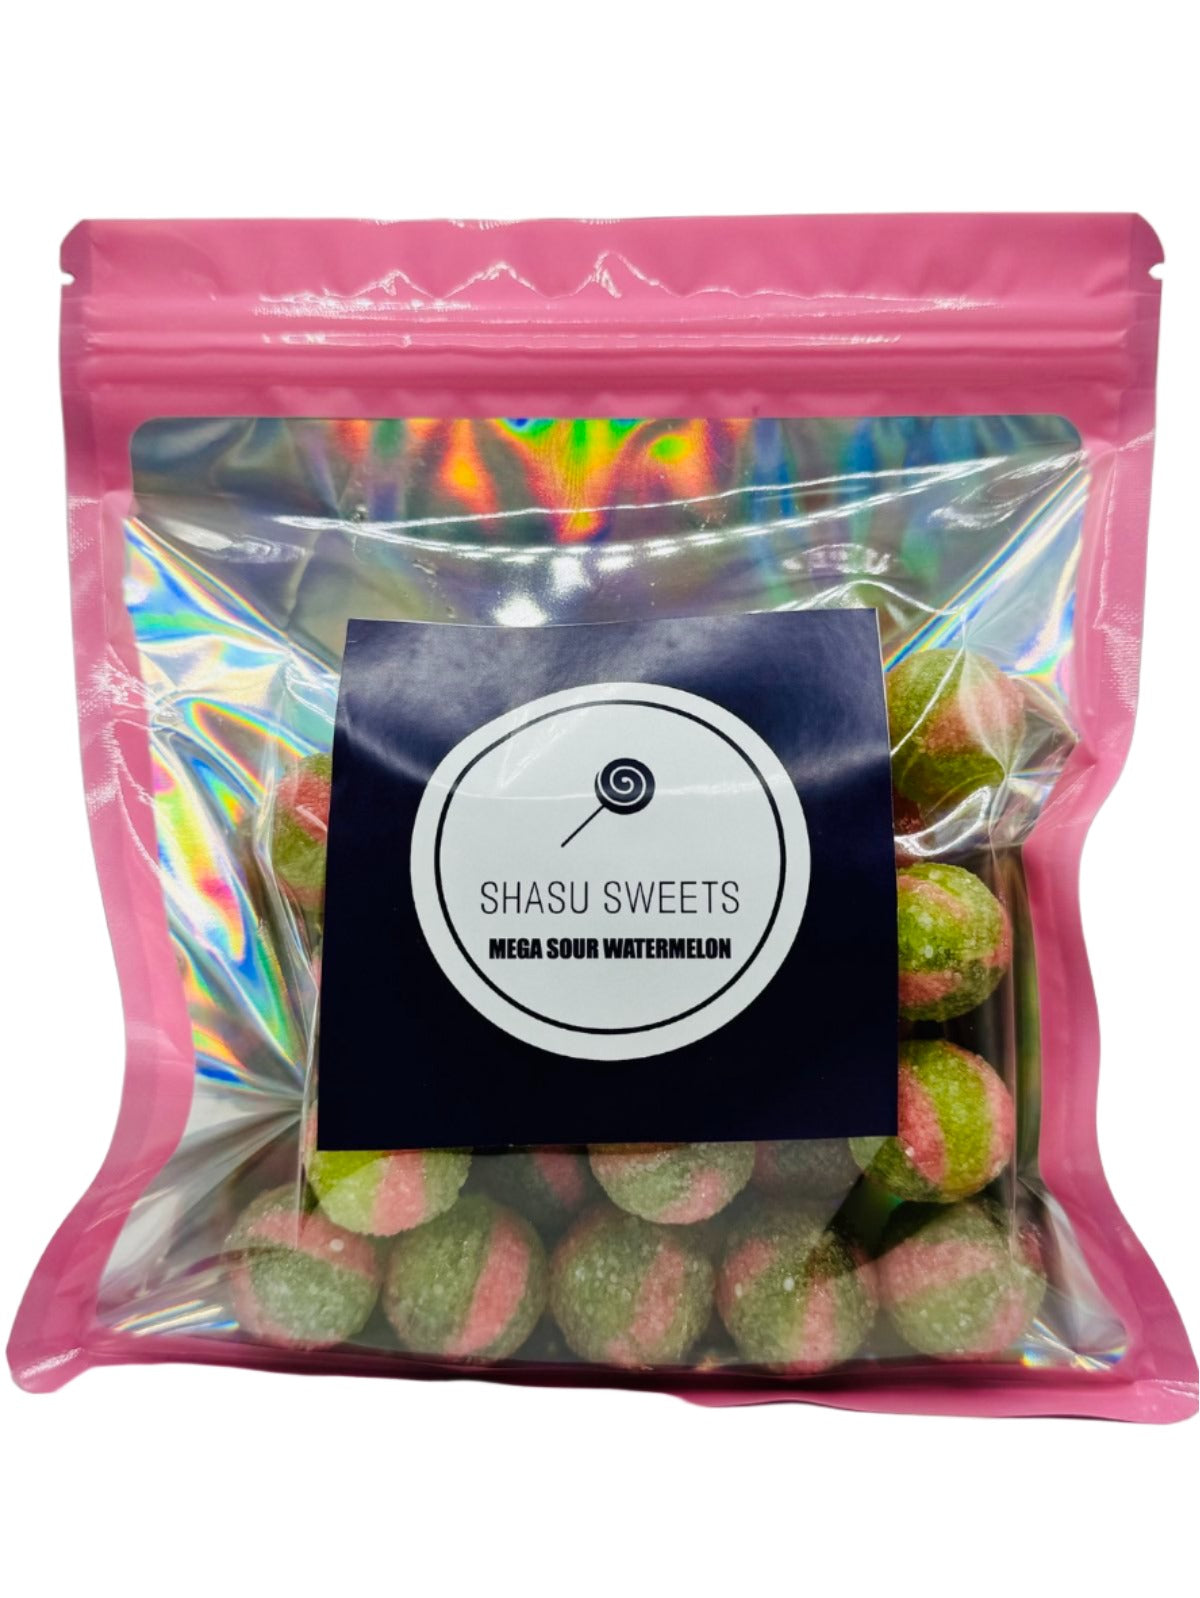 Shasu Sweets Mega Sour Watermelon Bombs - 227g (half pound)